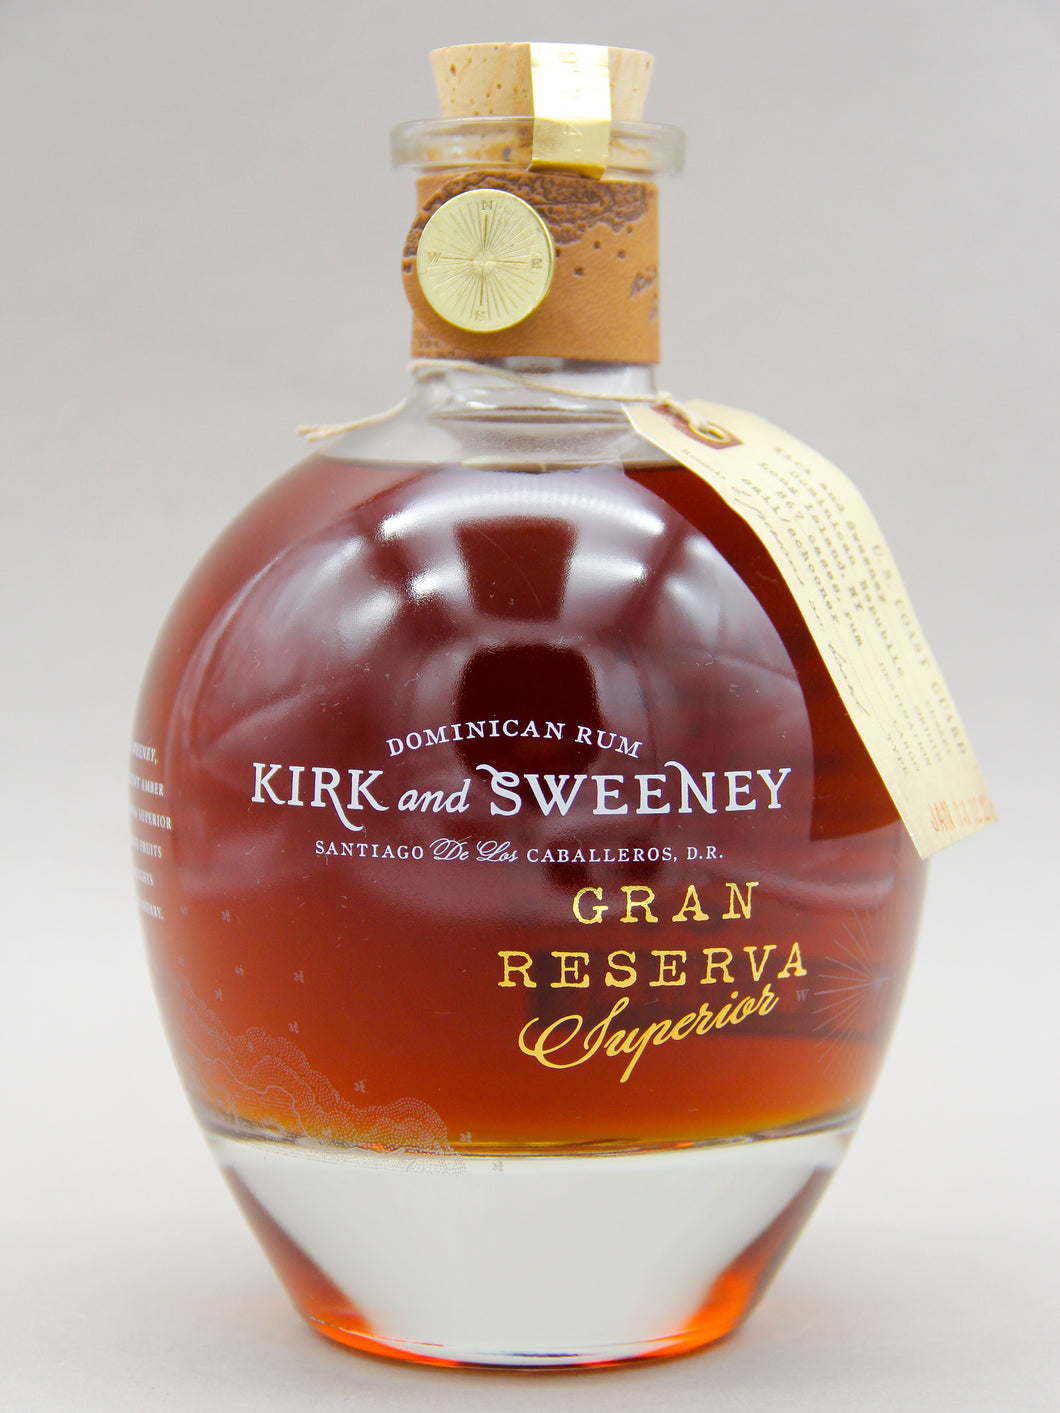 Kirk and Sweeney, Grand Reserva, Dominican Republic Rum (40%, 70cl)